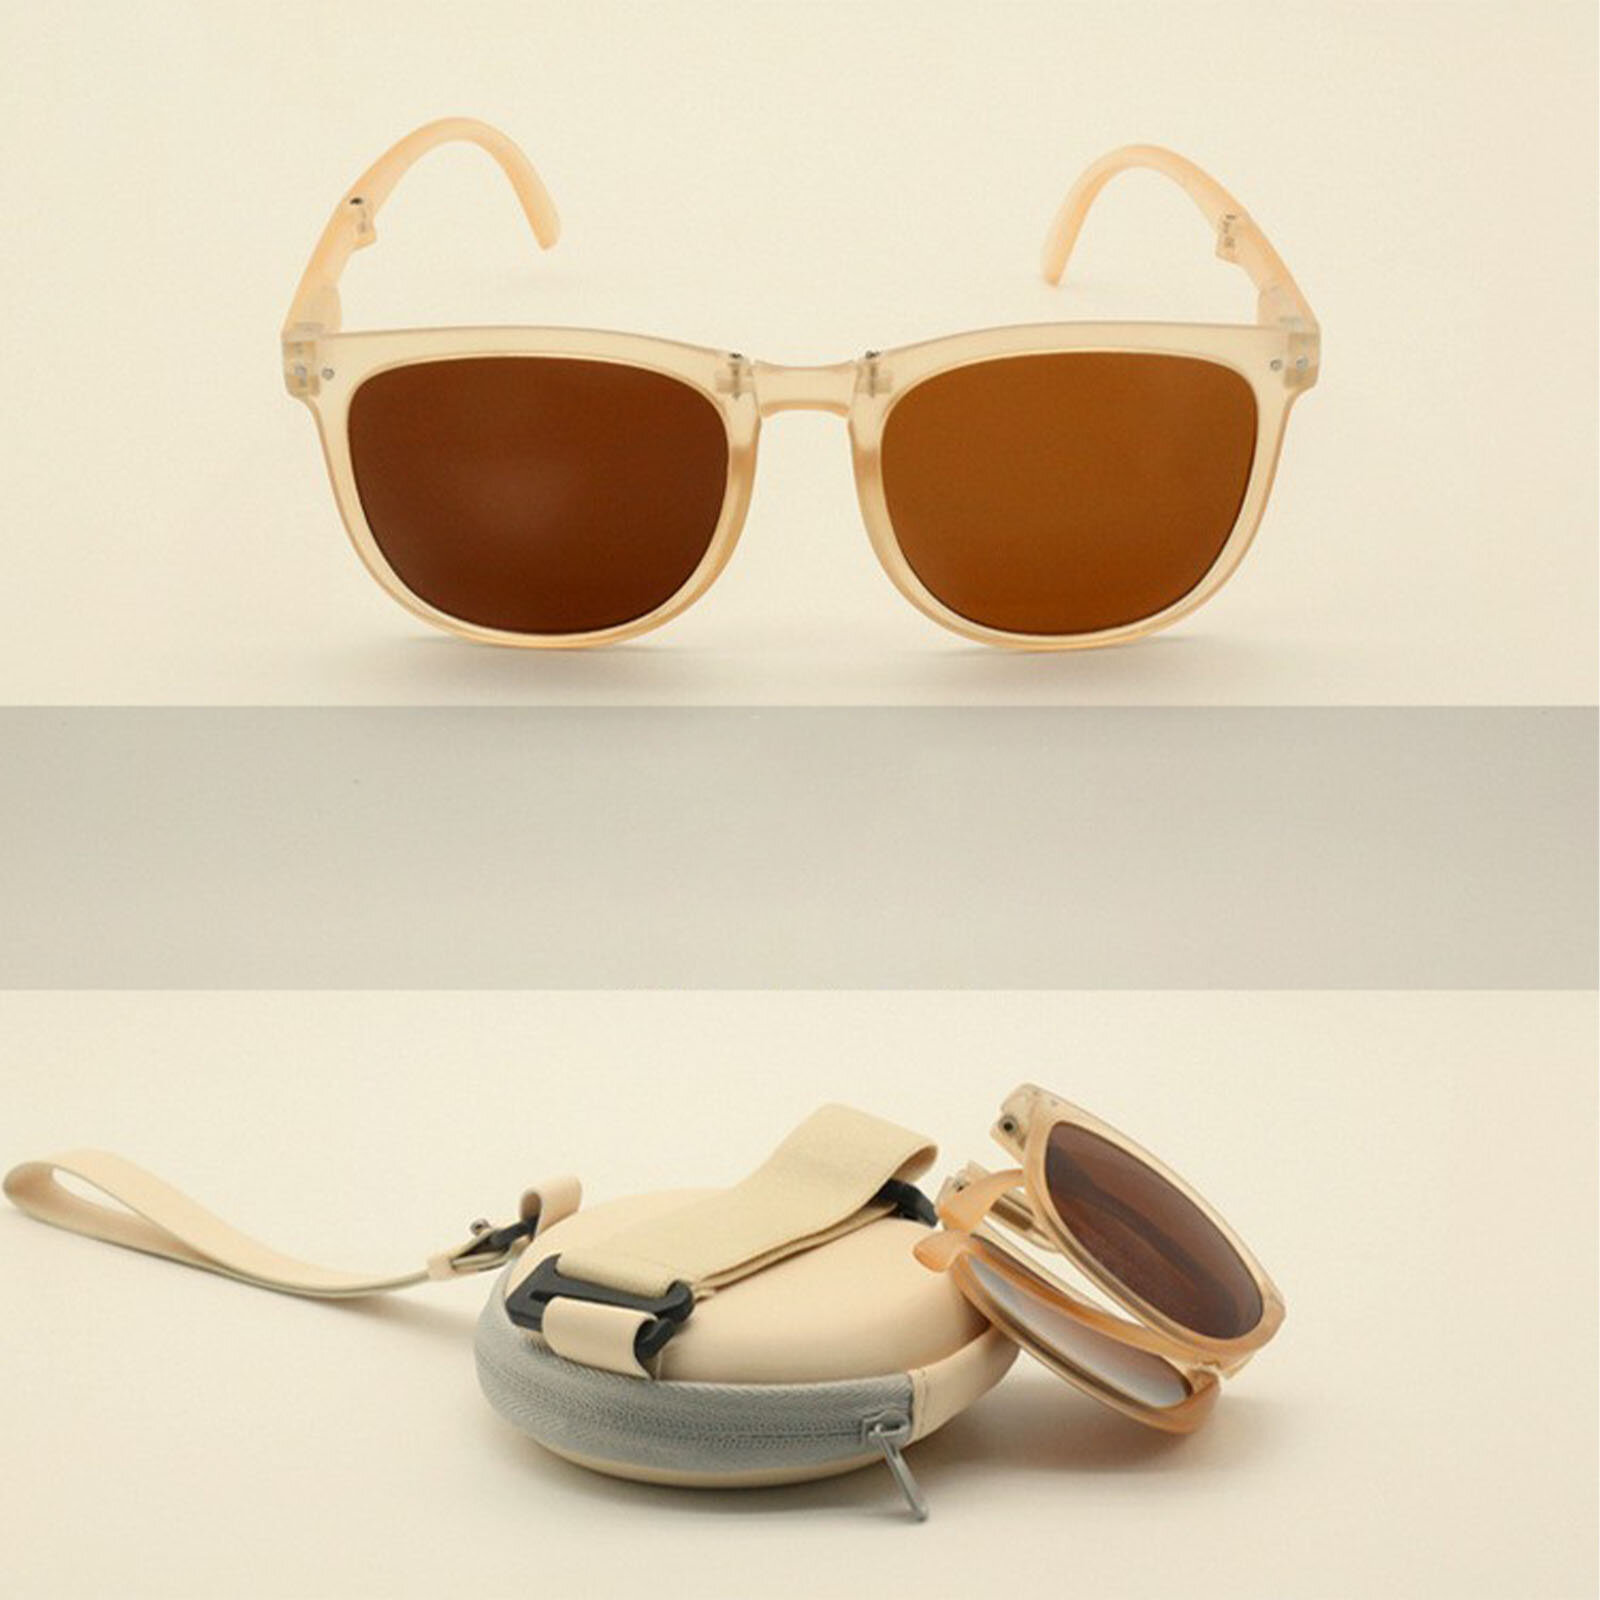 

Jassy Unisex Oval Frame Foldable UV Blocking Simple Fashion Lightweight Boxed Sunglasses